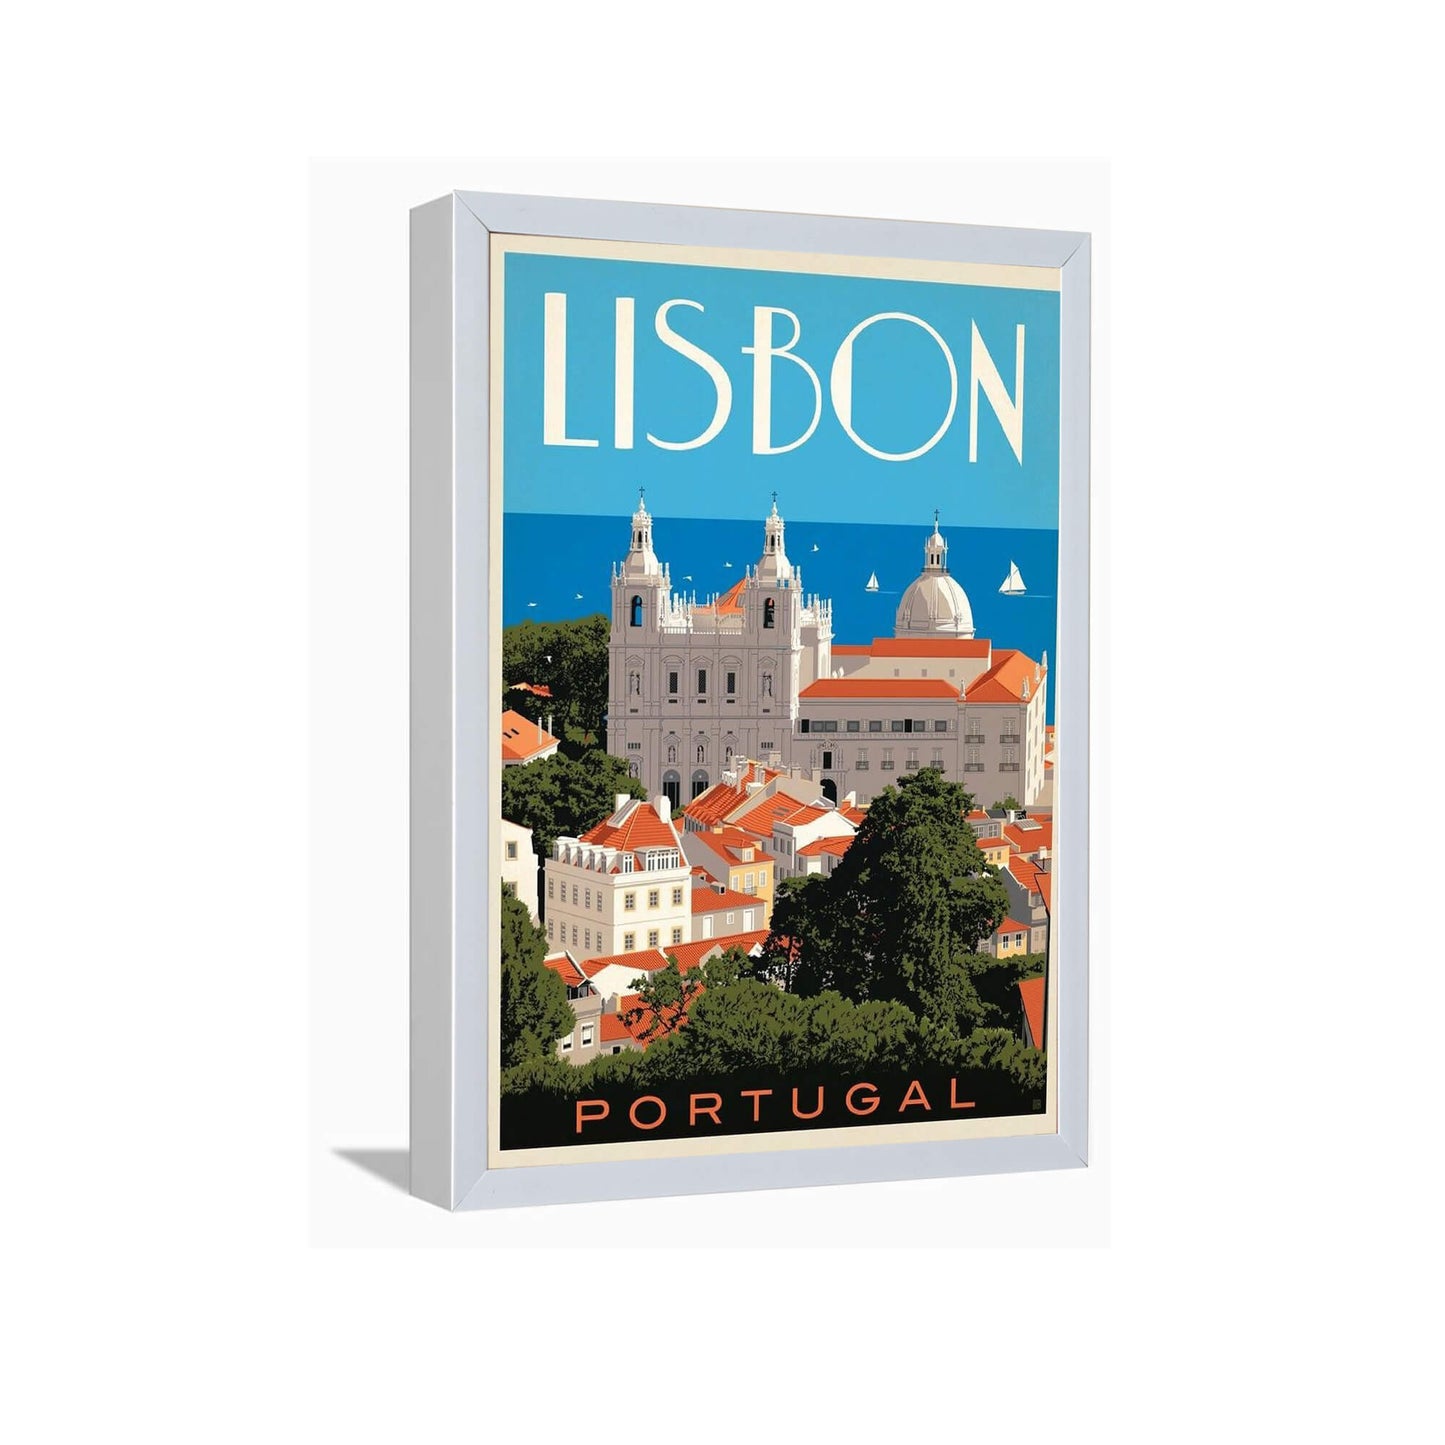 Lisbon Portugal---